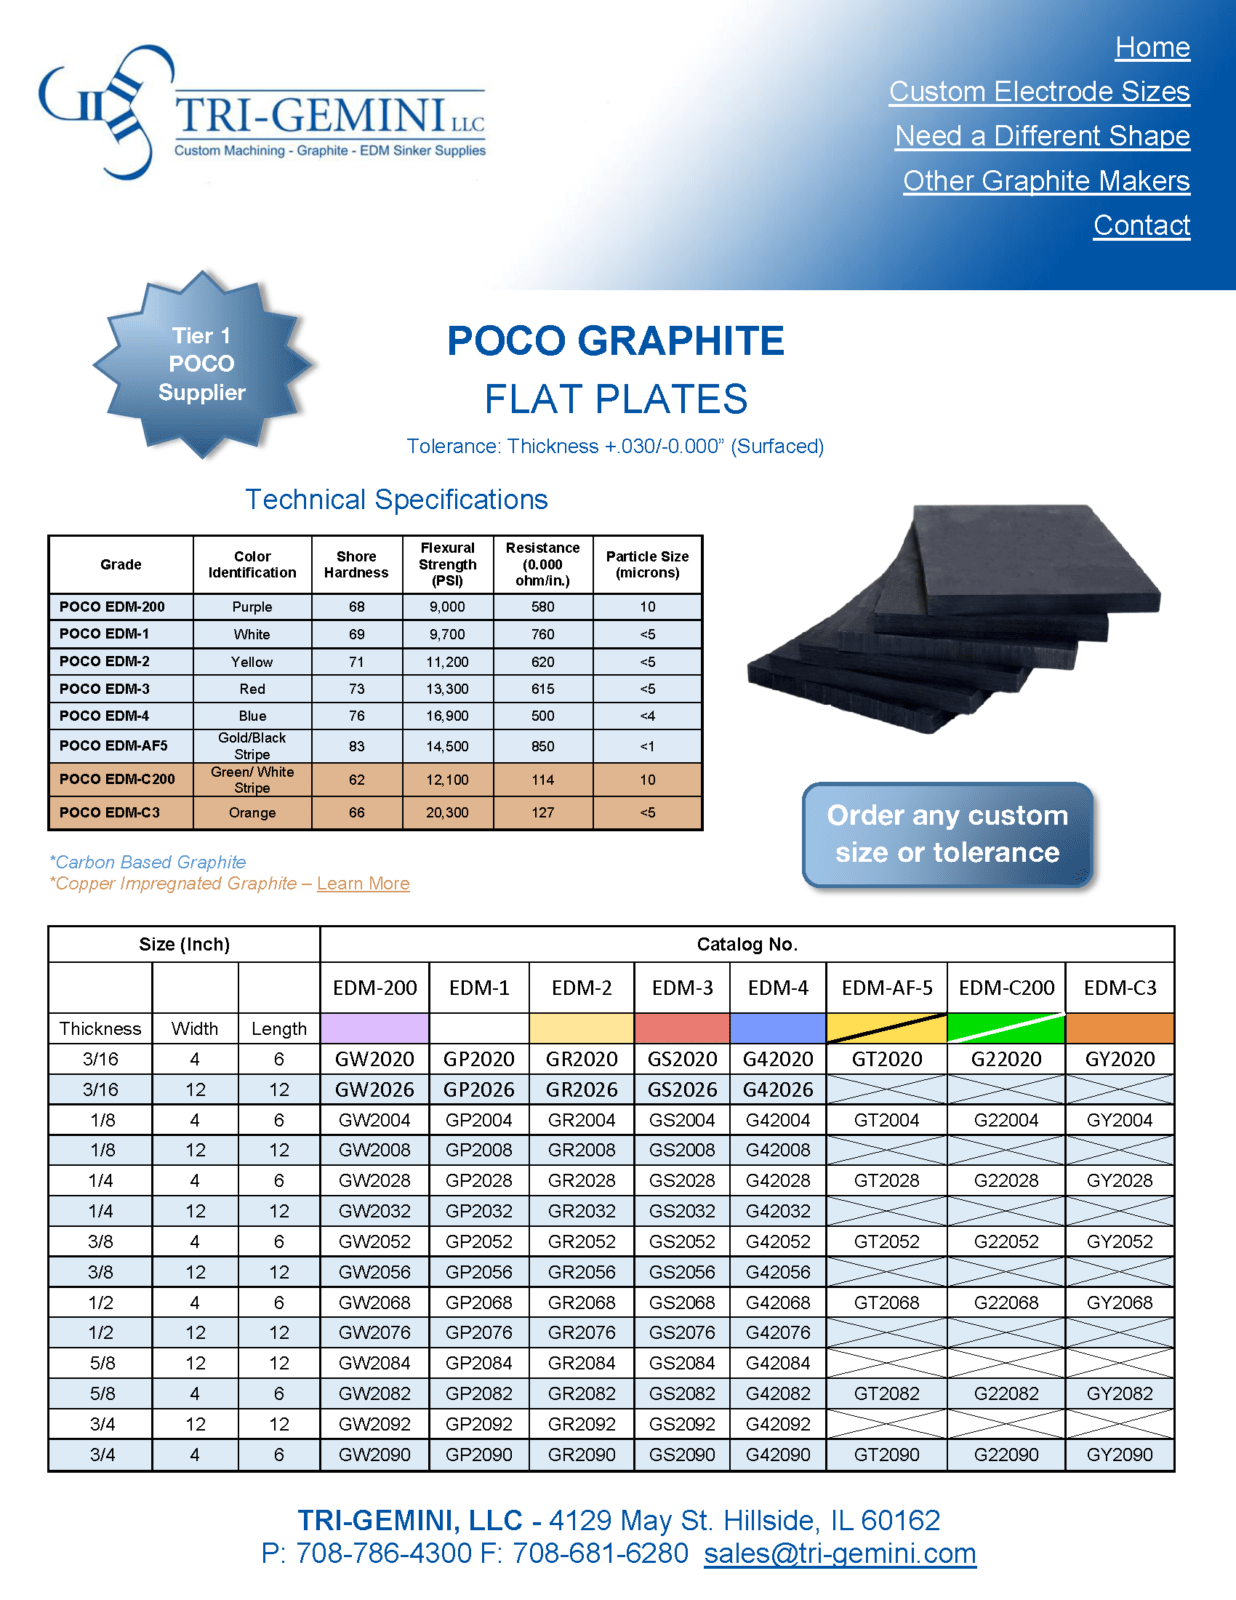 POCO Graphite Flat Plates Catalog Section